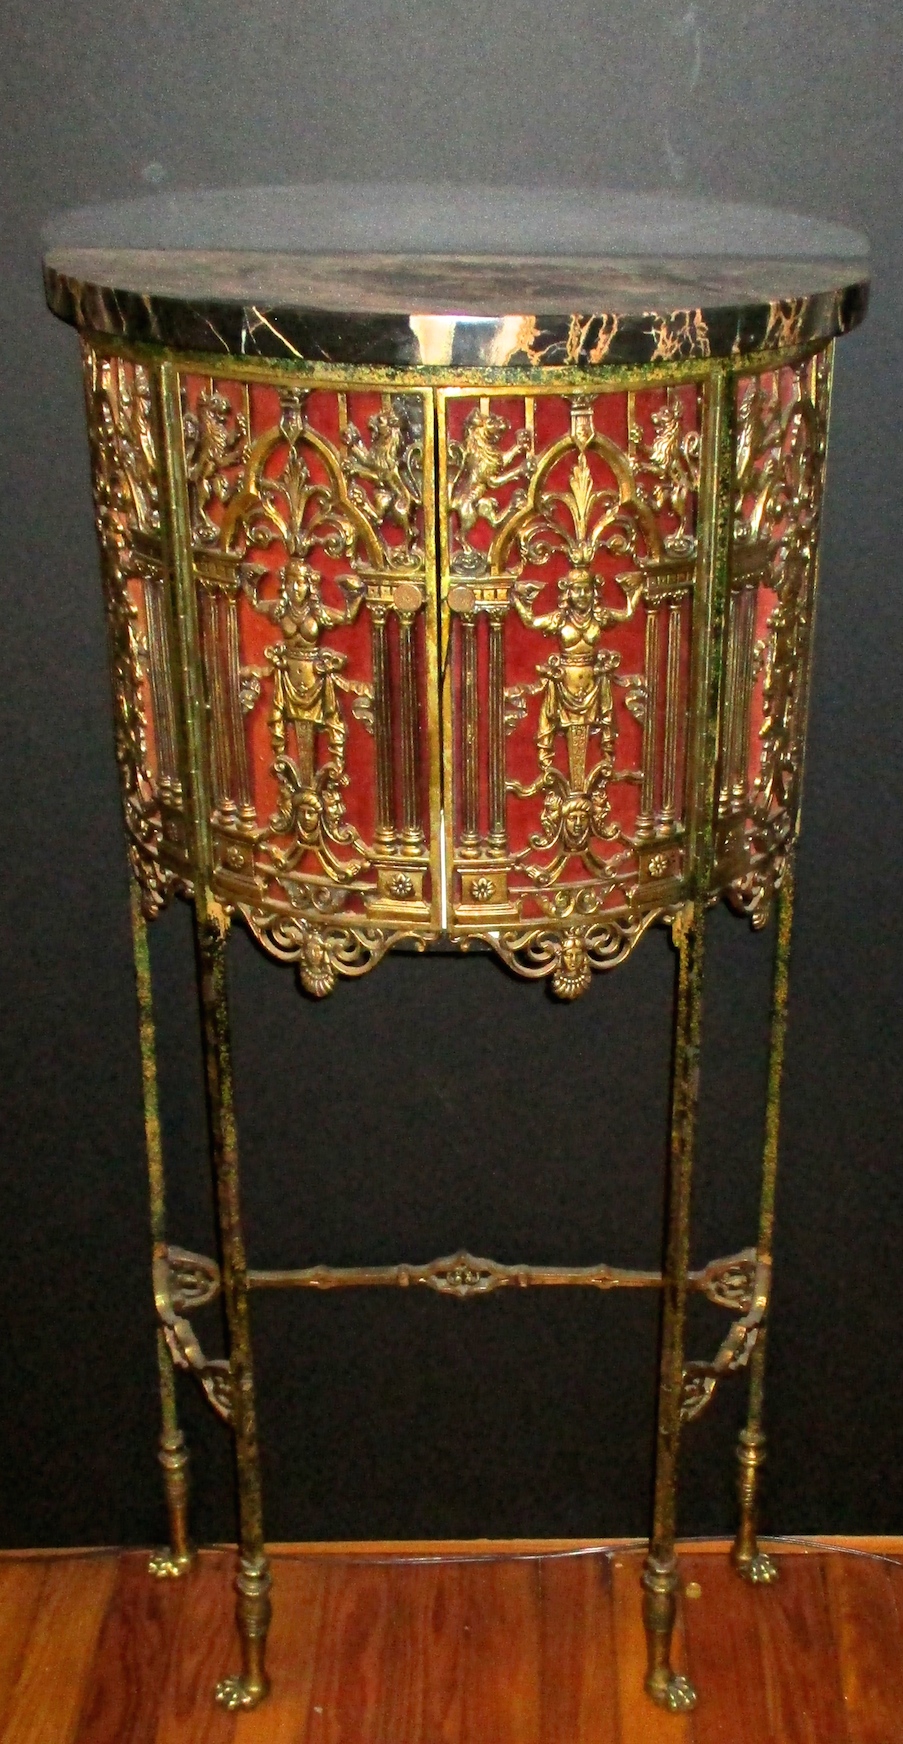 Bronze & Iron Telephone Stand (View w/o Chair) w/Oriental Motif (Attributed to Oscar Bach/Segar Studios)